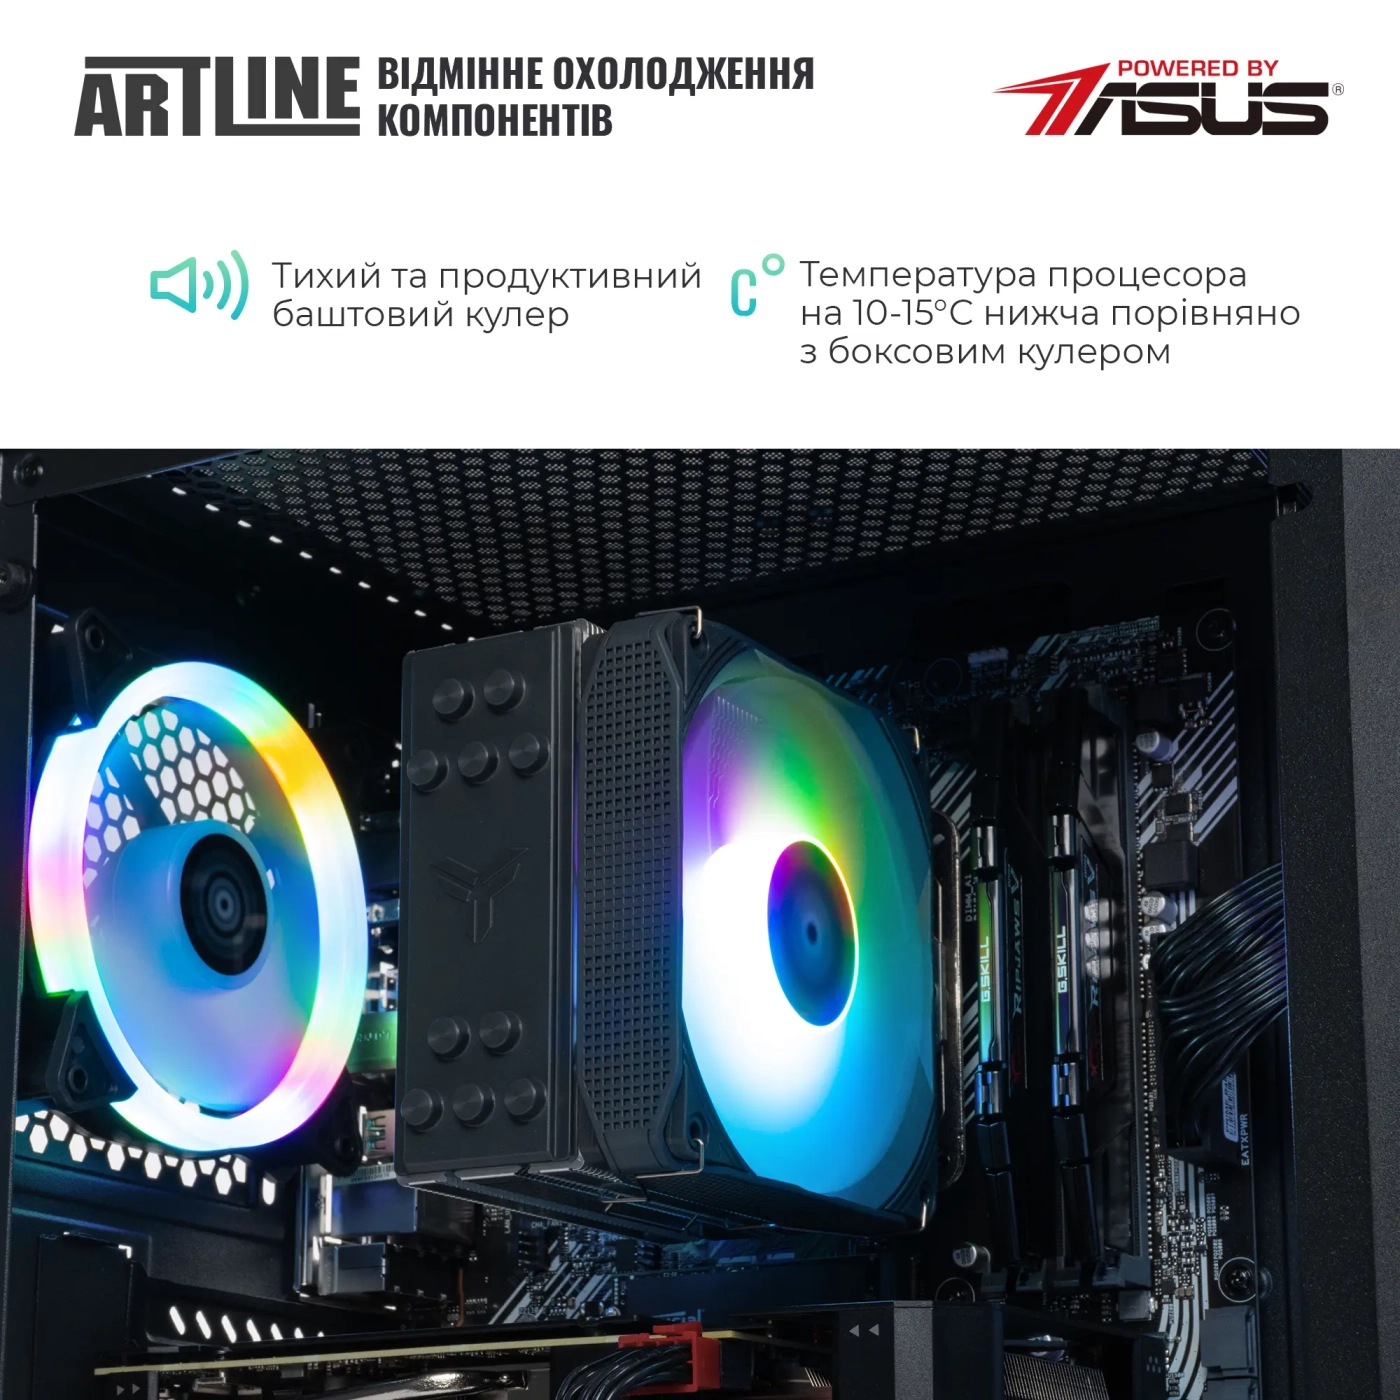 Купить Компьютер ARTLINE Gaming X81 (X81v30) - фото 5